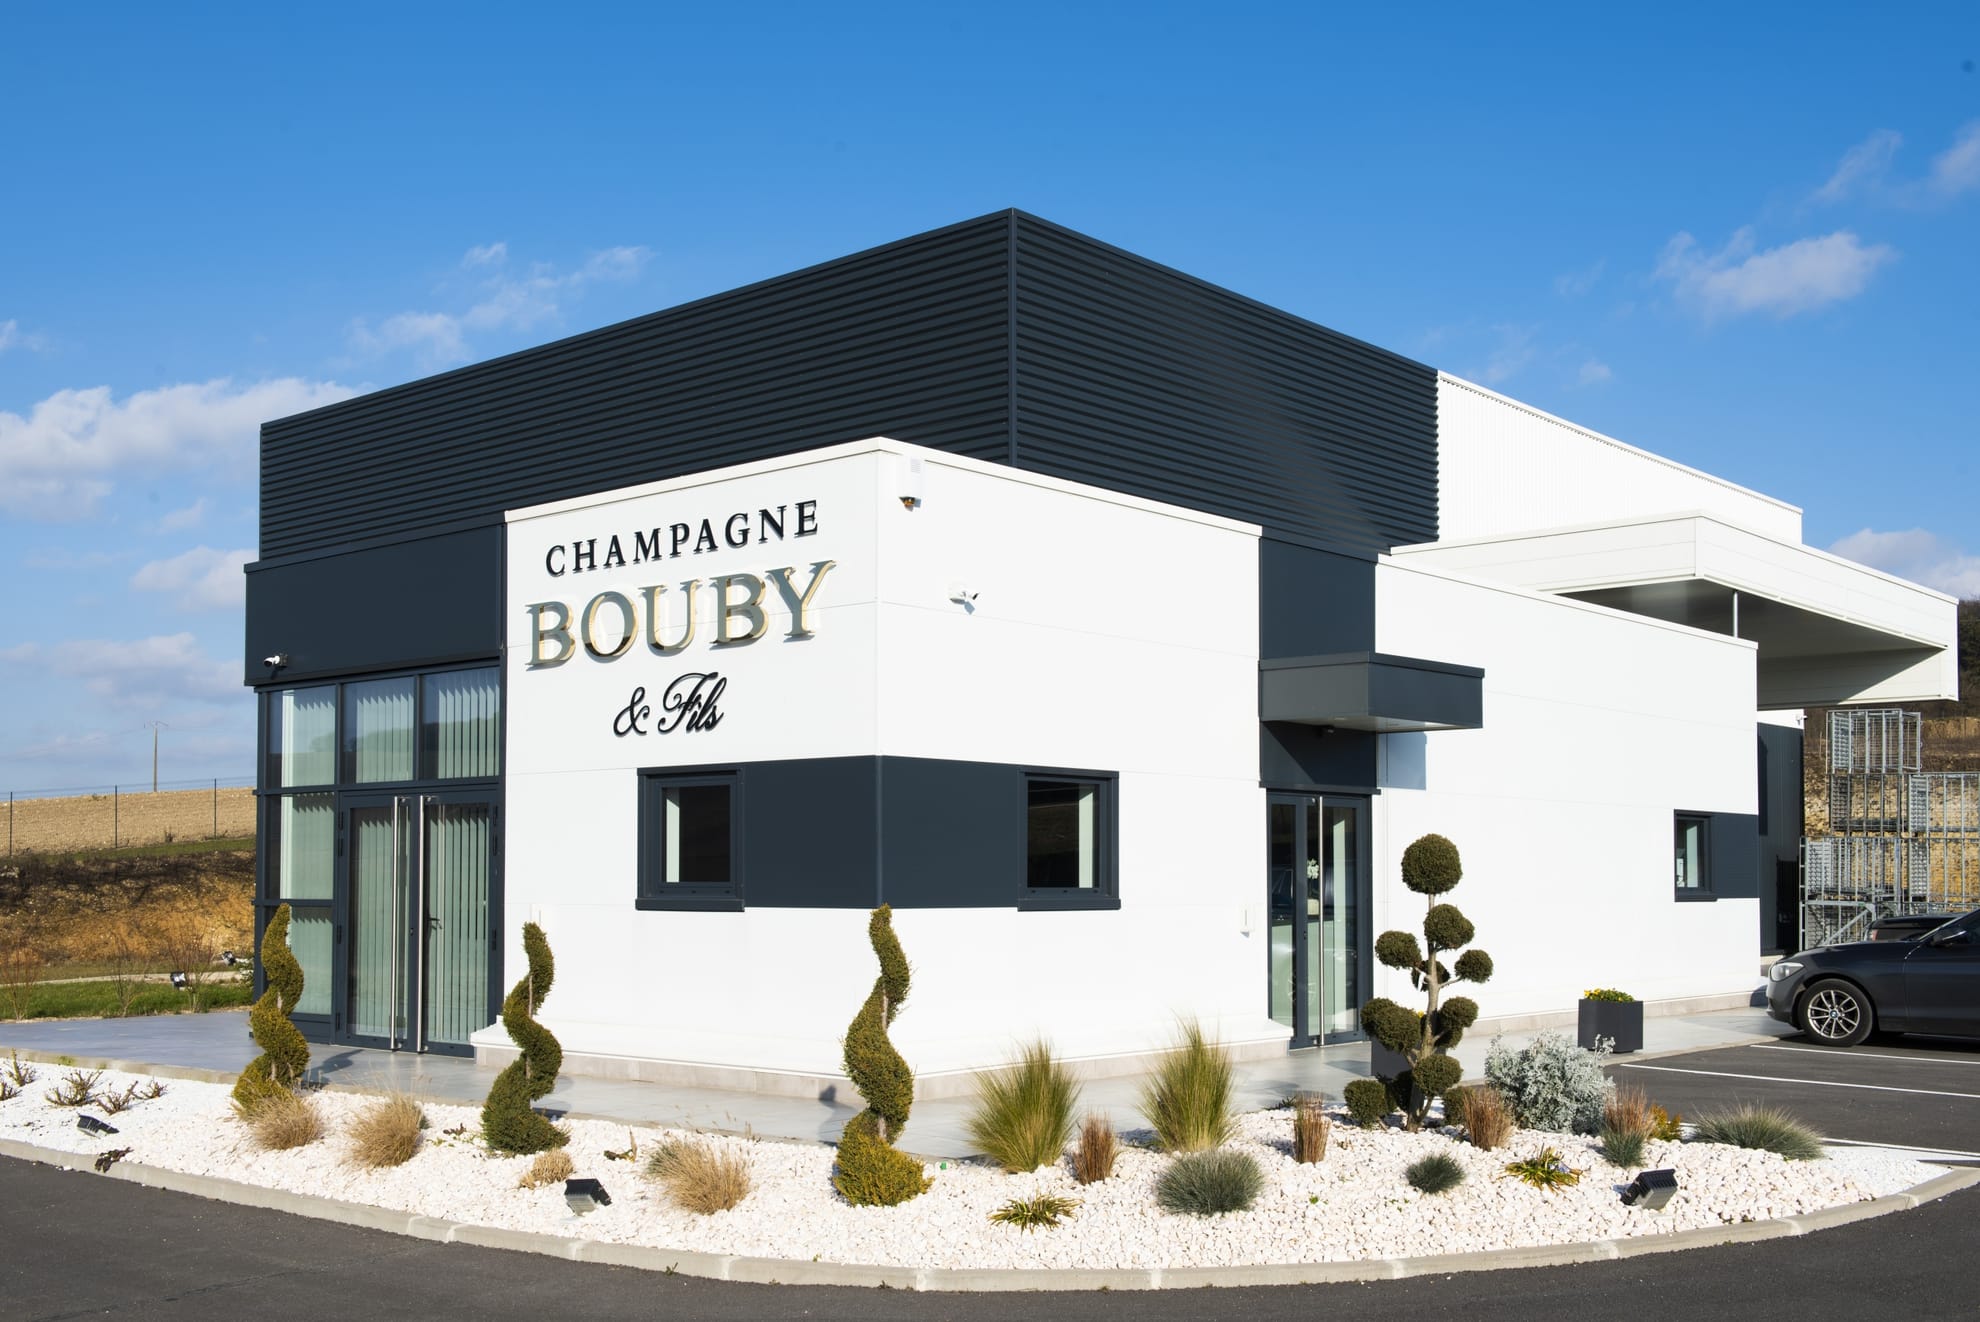 Bouby & Fils Champagne